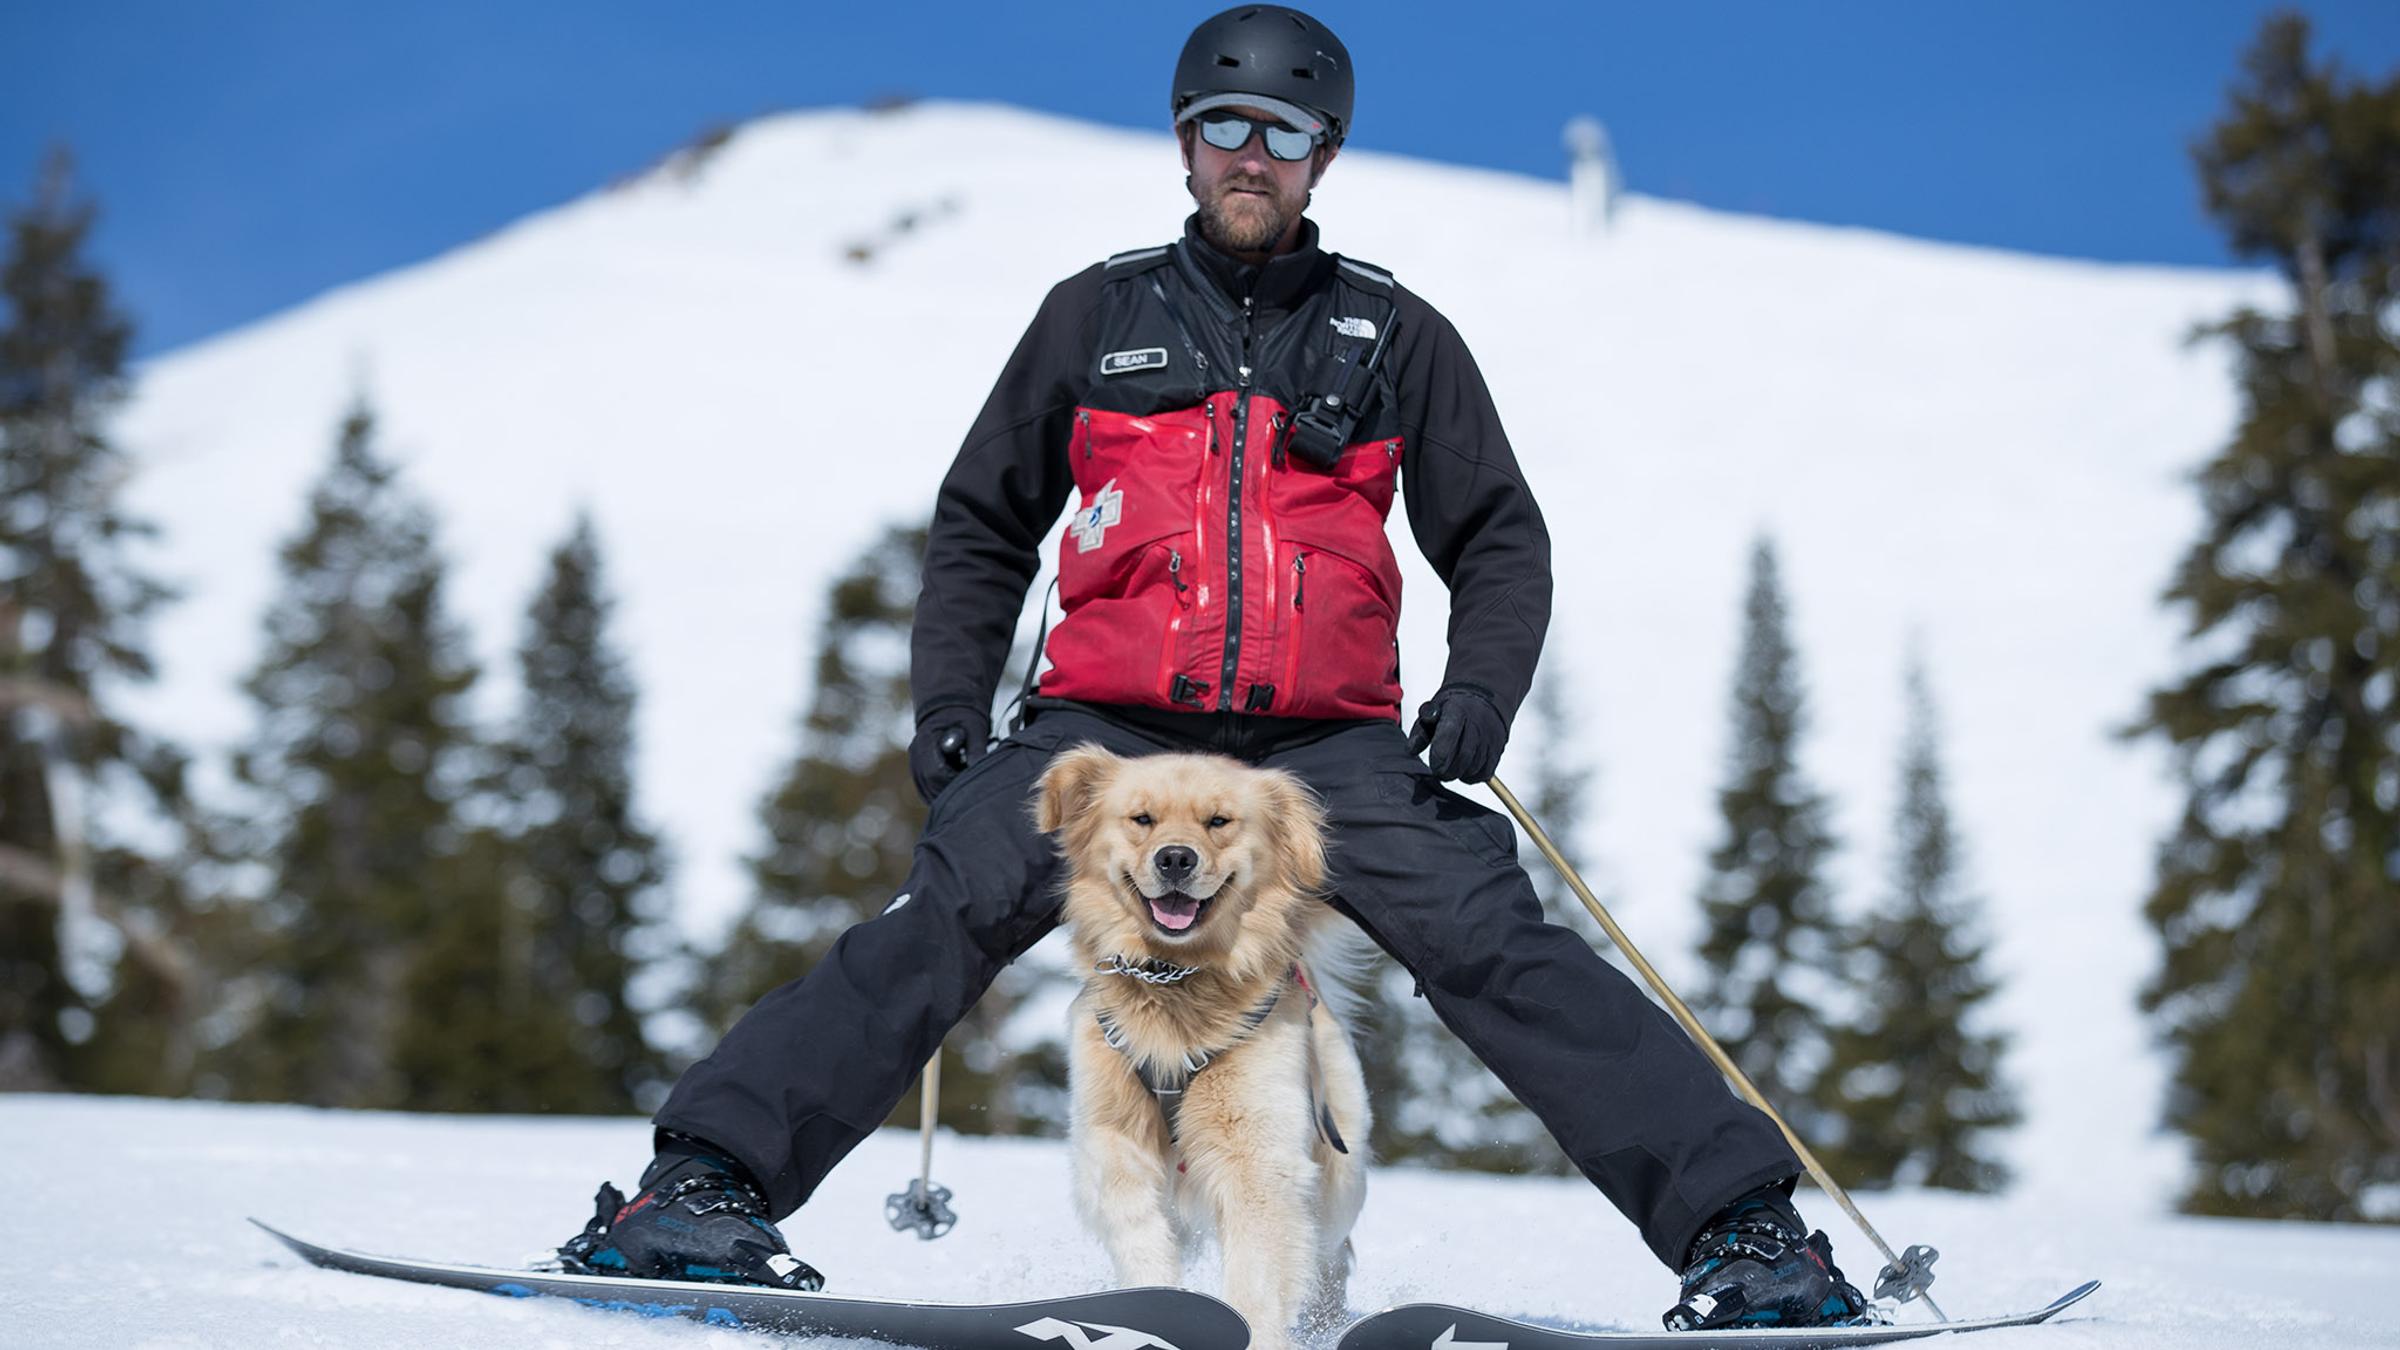 SKI PATROLLER SKIING WITH HIS PATROL DOG AT ALPINE MEADOWS